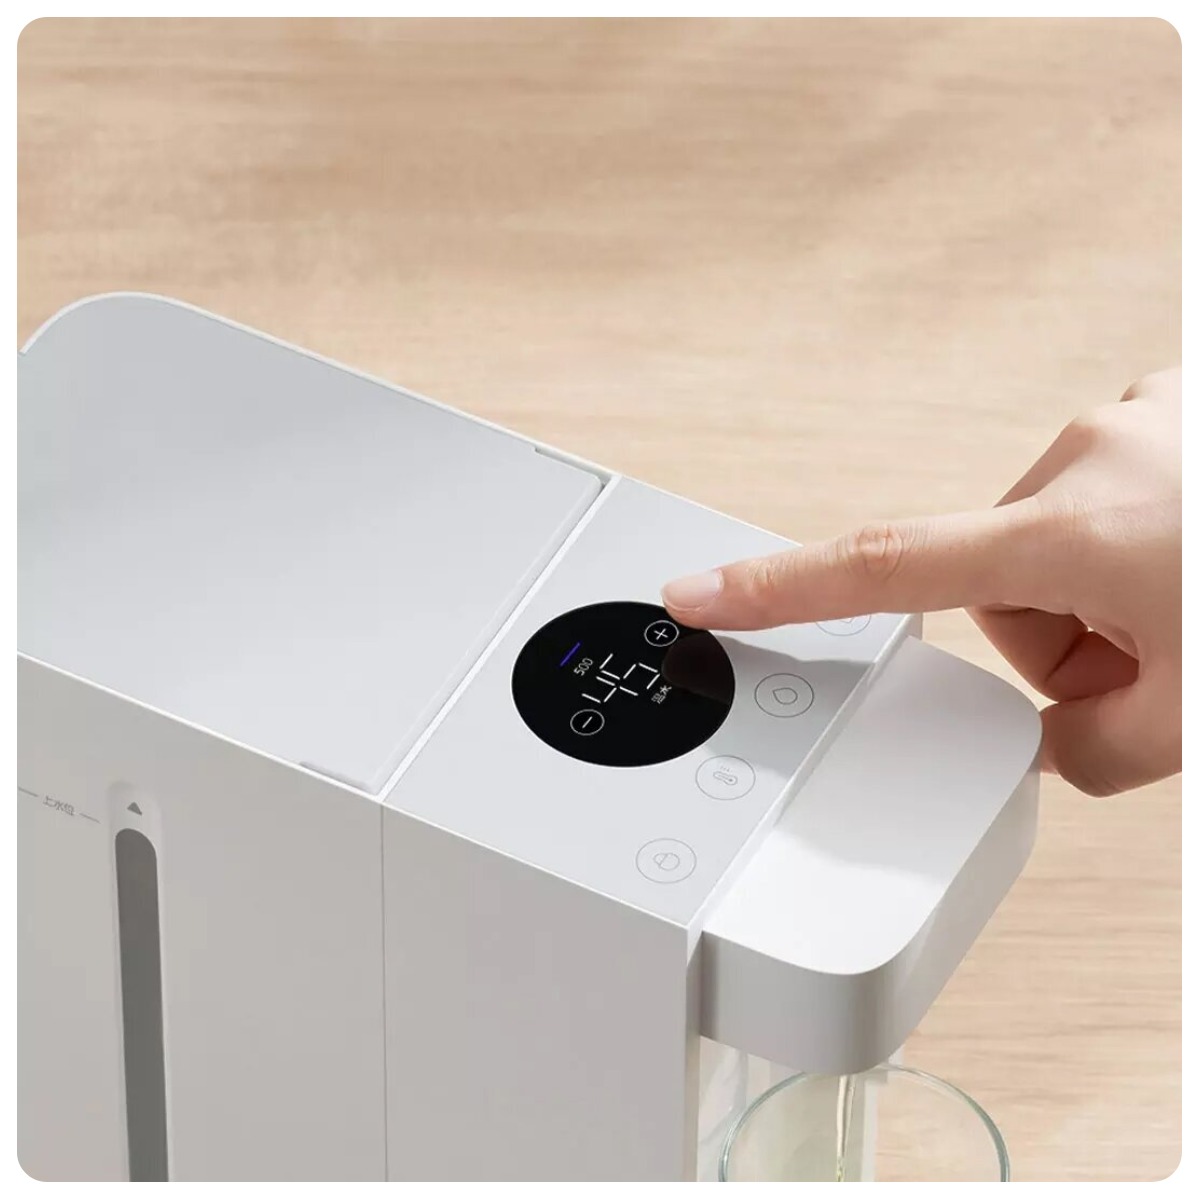 Mijia-Instant-Hot-Water-Dispenser-2-5L-02